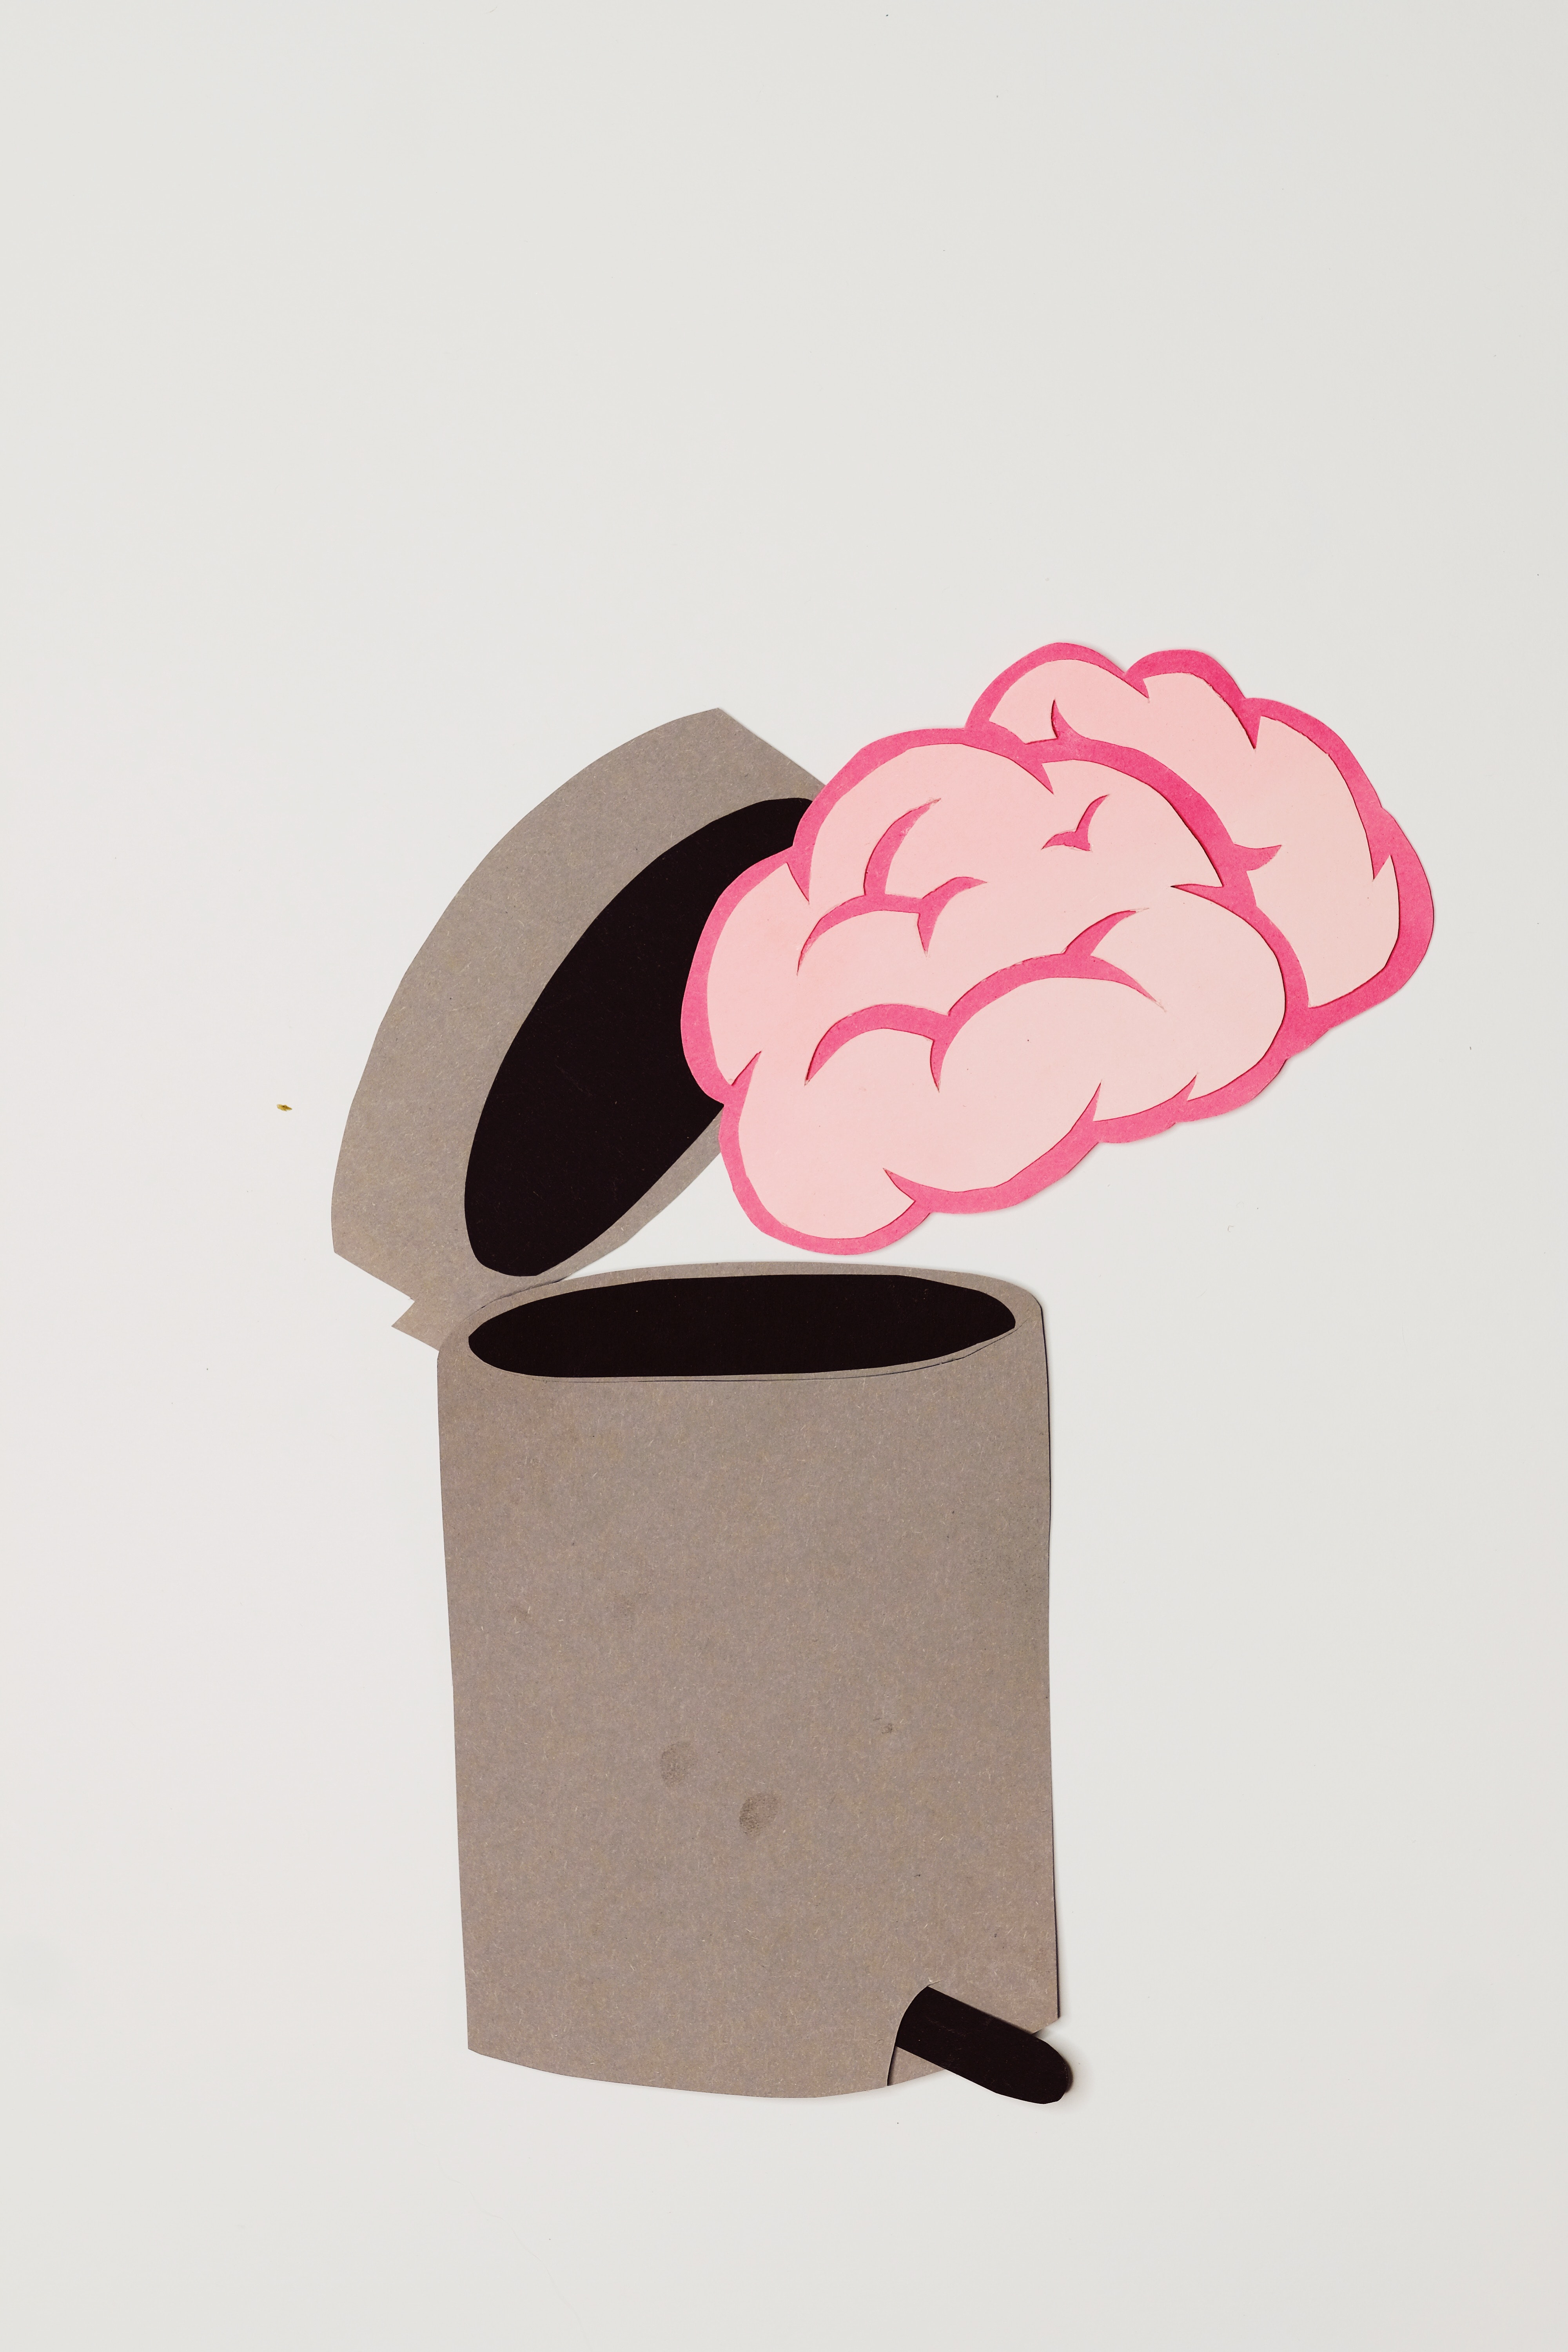 Paper Cutout of a Brain Plus Heart · Free